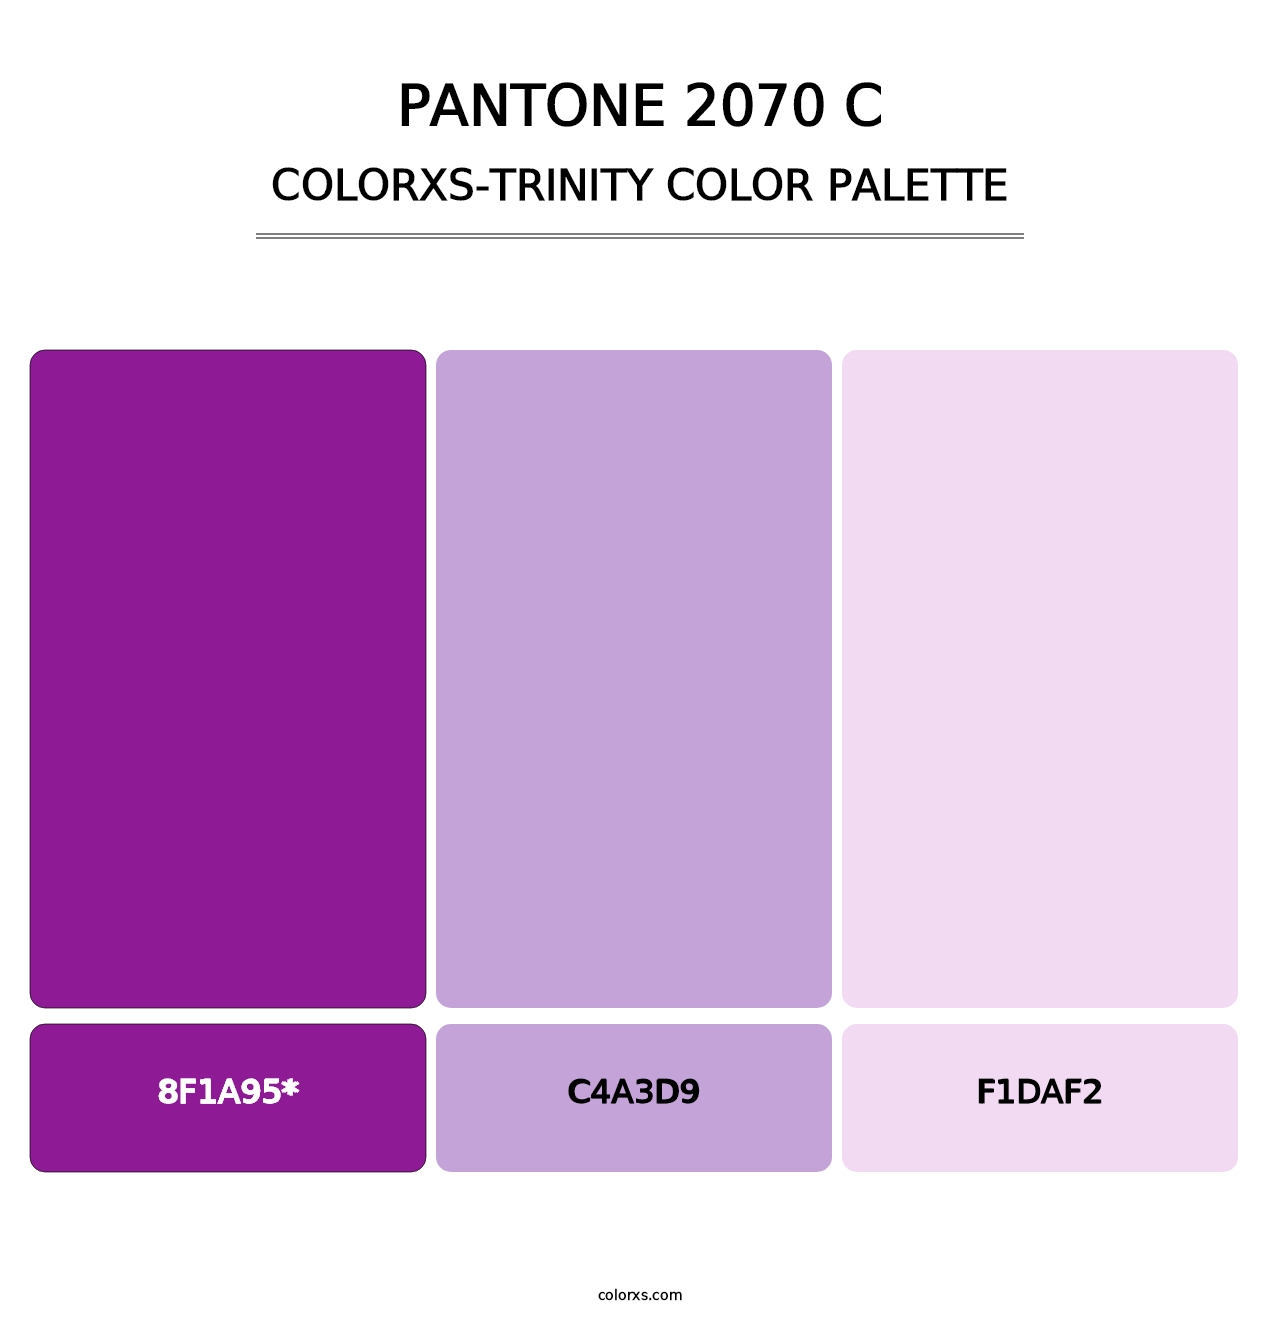 PANTONE 2070 C - Colorxs Trinity Palette